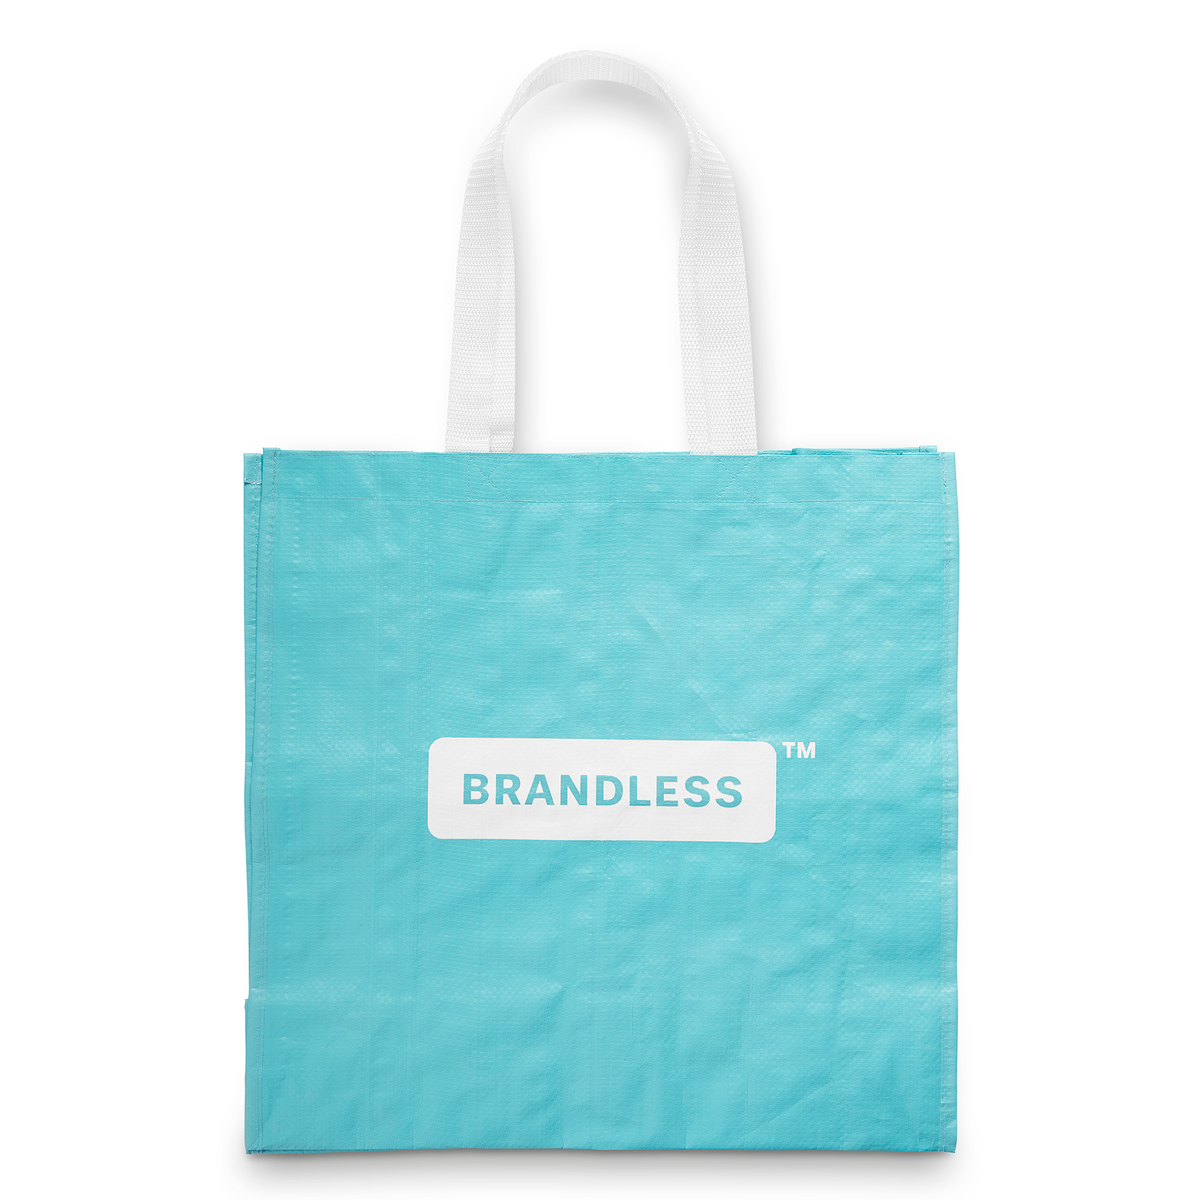 Side B view, teal bag, Brandless logo centered.